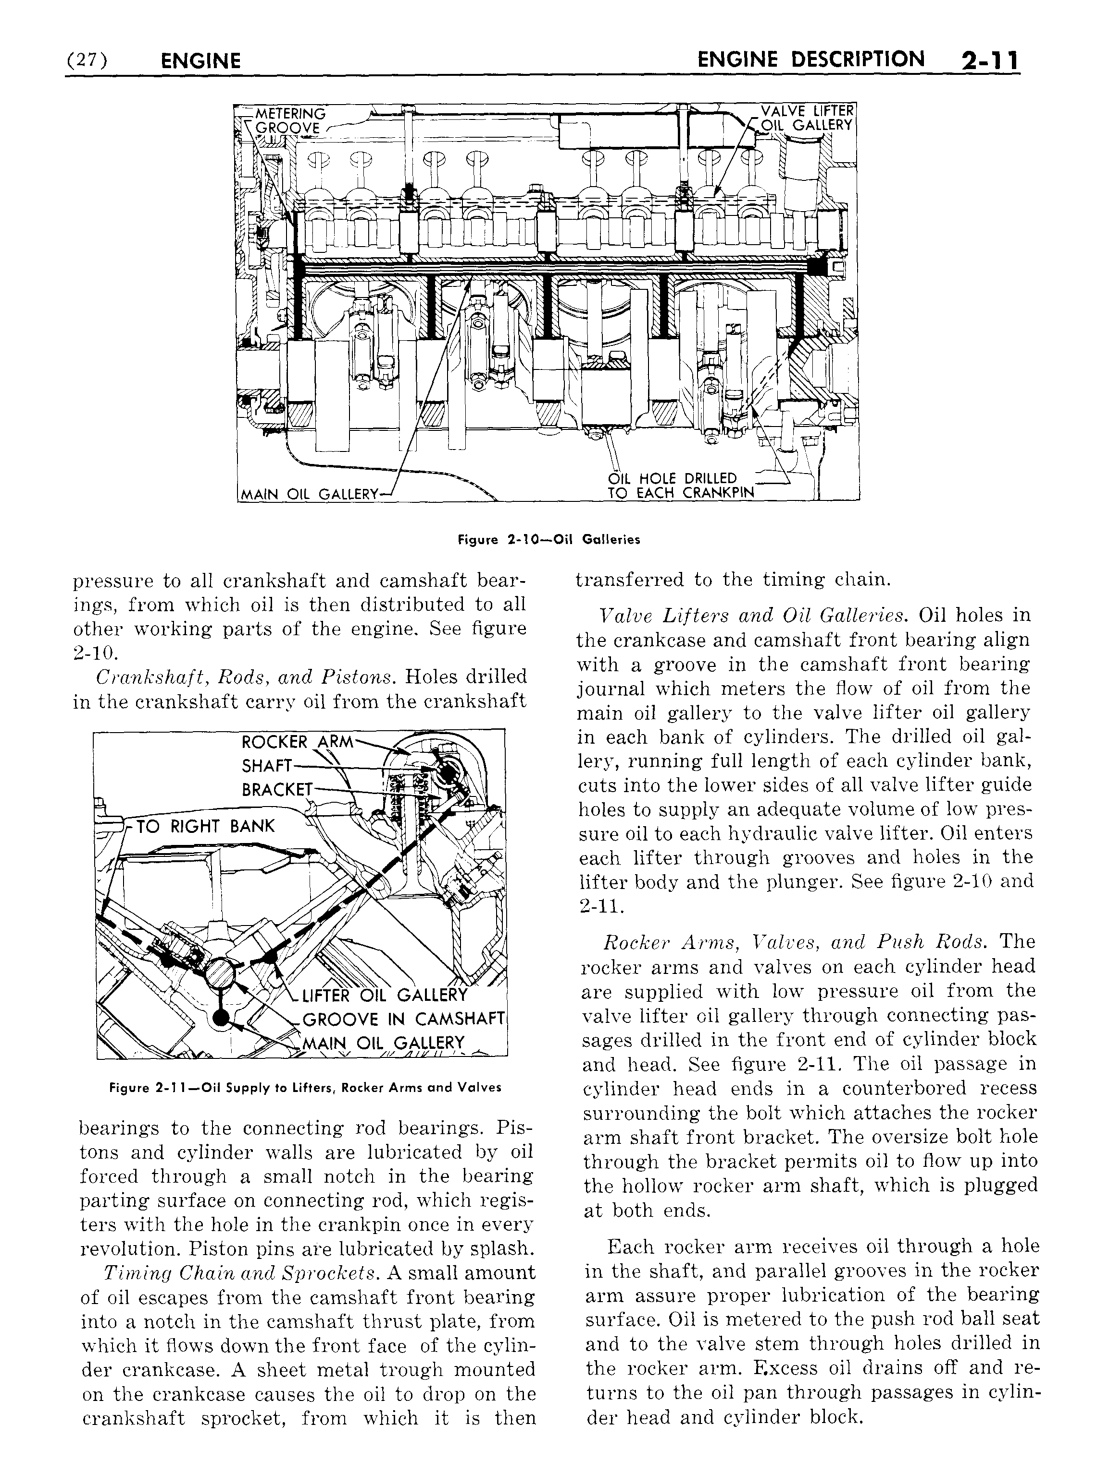 n_03 1956 Buick Shop Manual - Engine-011-011.jpg